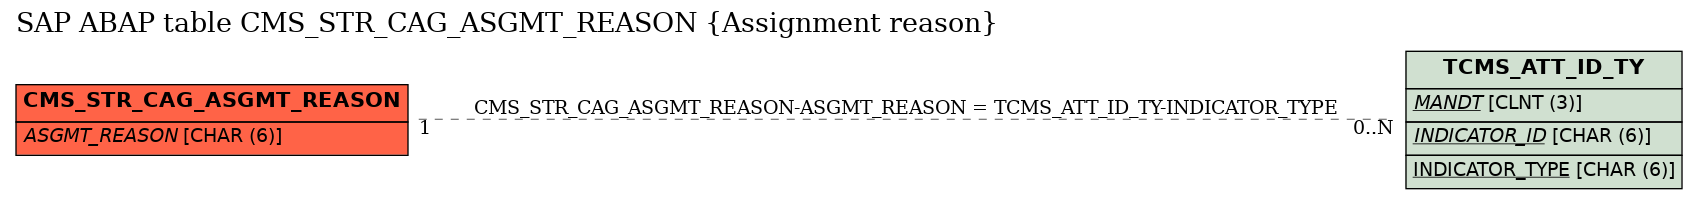 E-R Diagram for table CMS_STR_CAG_ASGMT_REASON (Assignment reason)